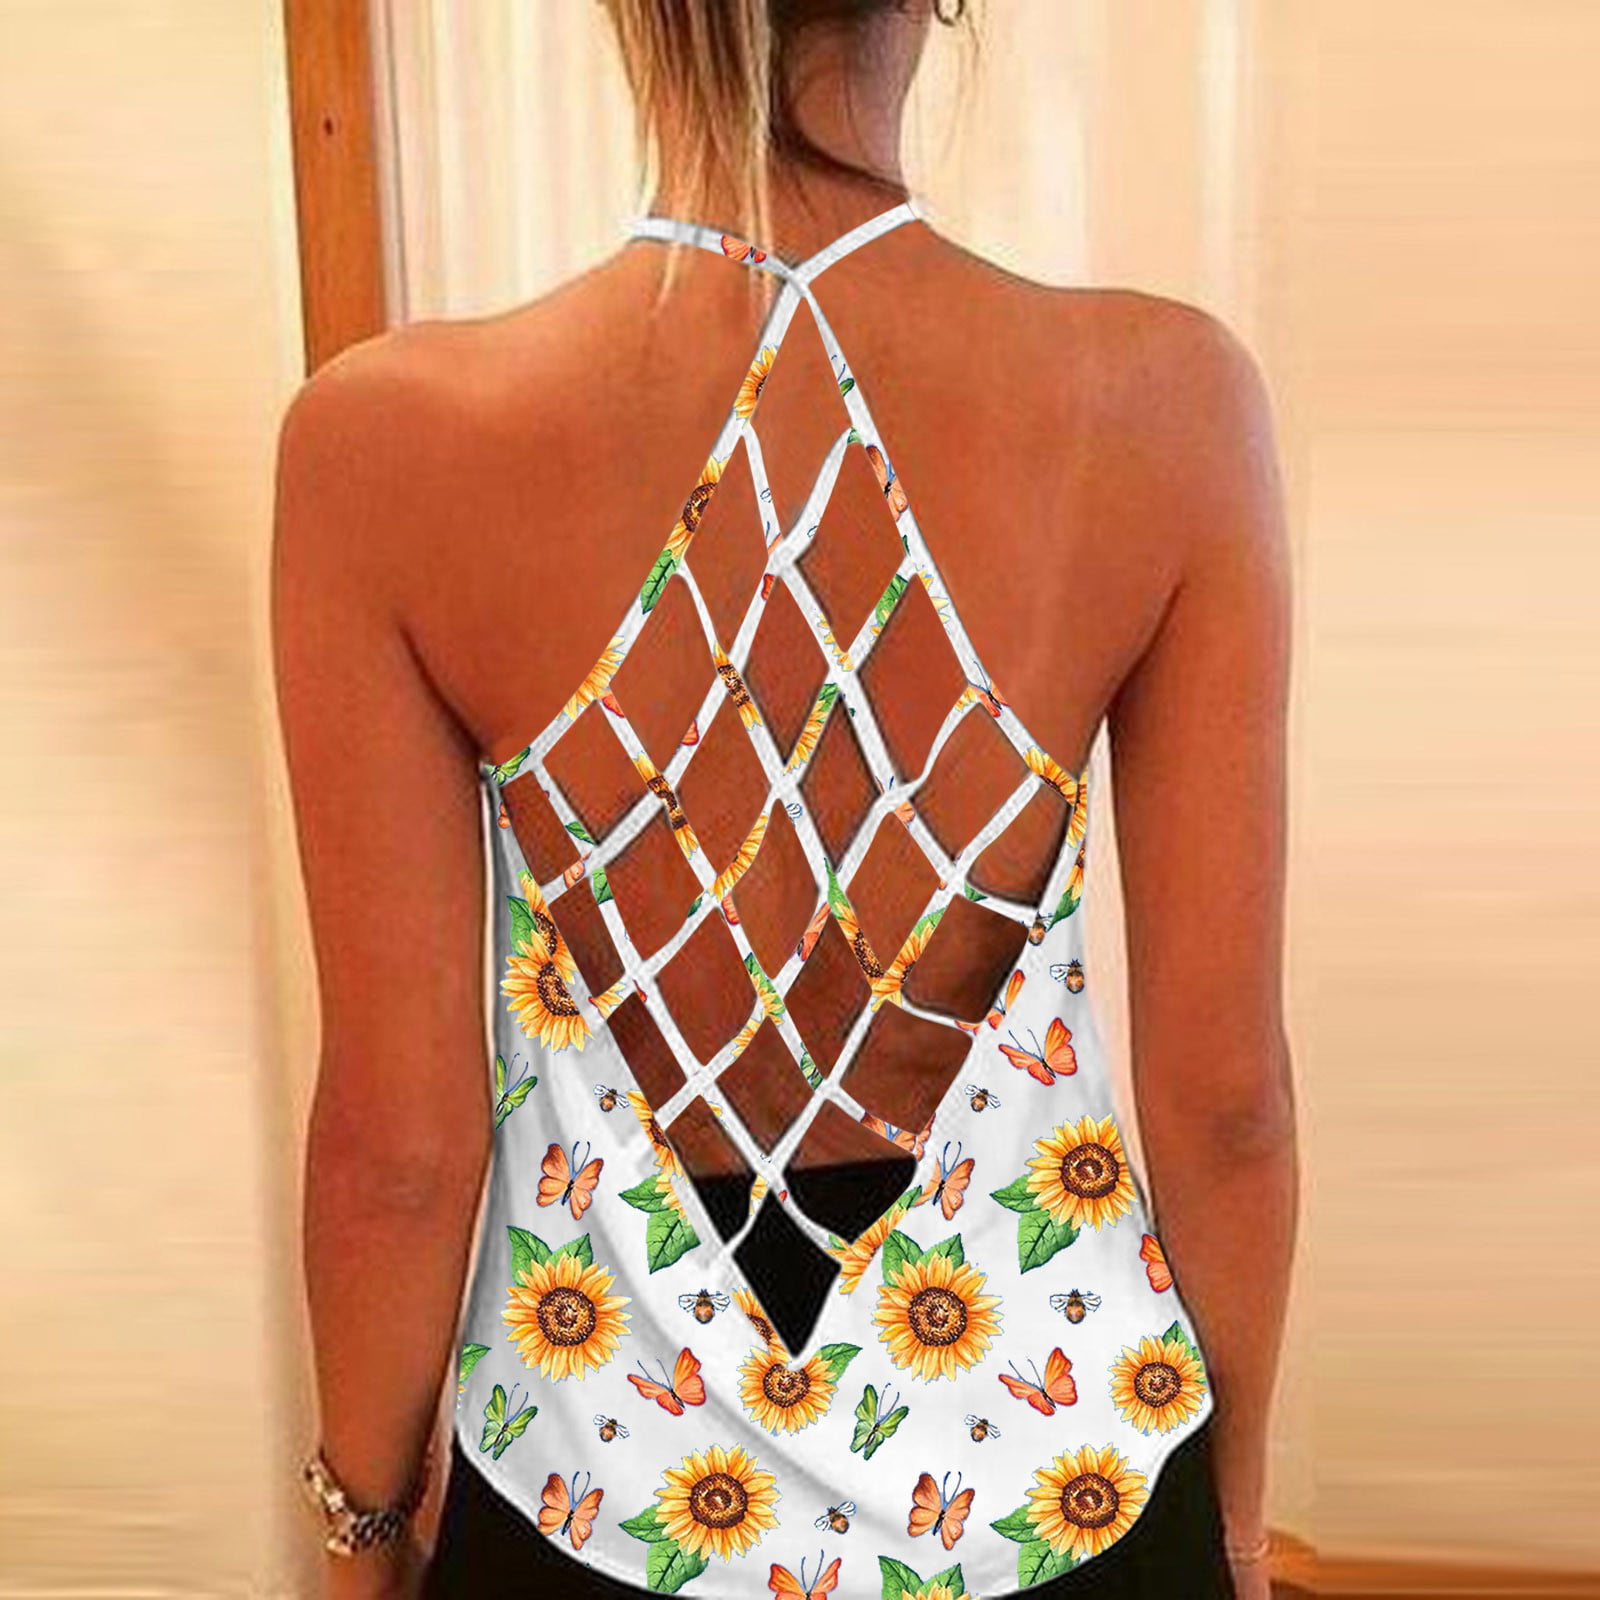 NPRADLA Womens Vest Tops Ladies Girls Sunflowe Print Plus Size T Shirts Casual Loose Tank Top Soft Comfortable Blouses